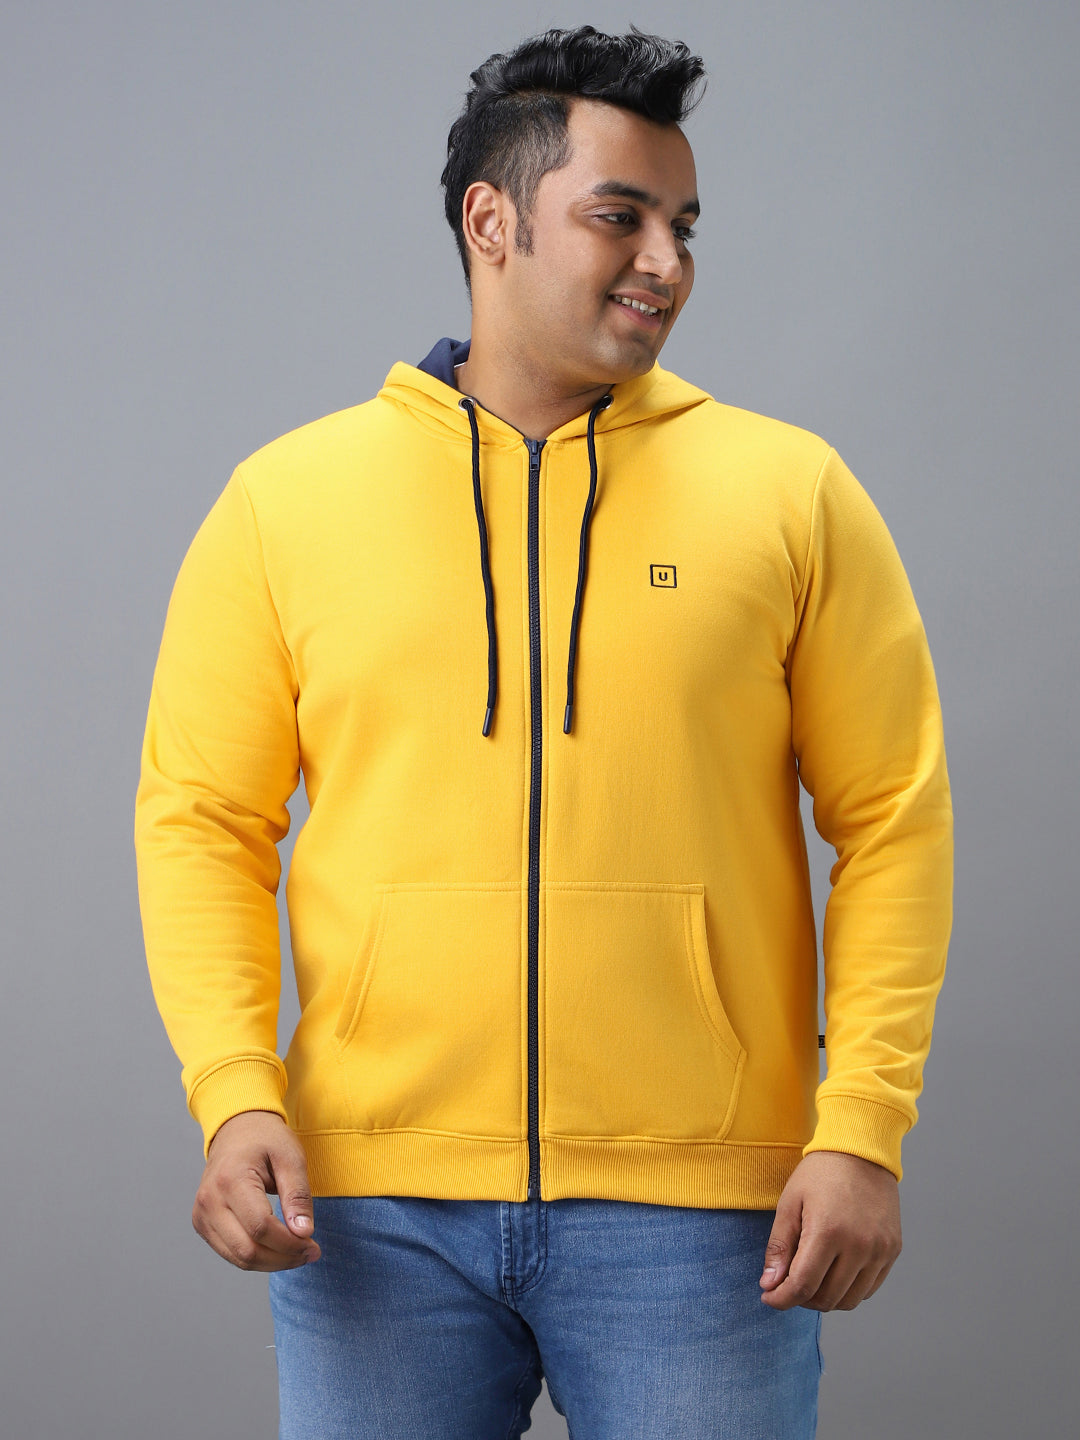 Plus Men's Yellow Solid Cotton Zippered Hooded Casual Winterwear Sweatshirt